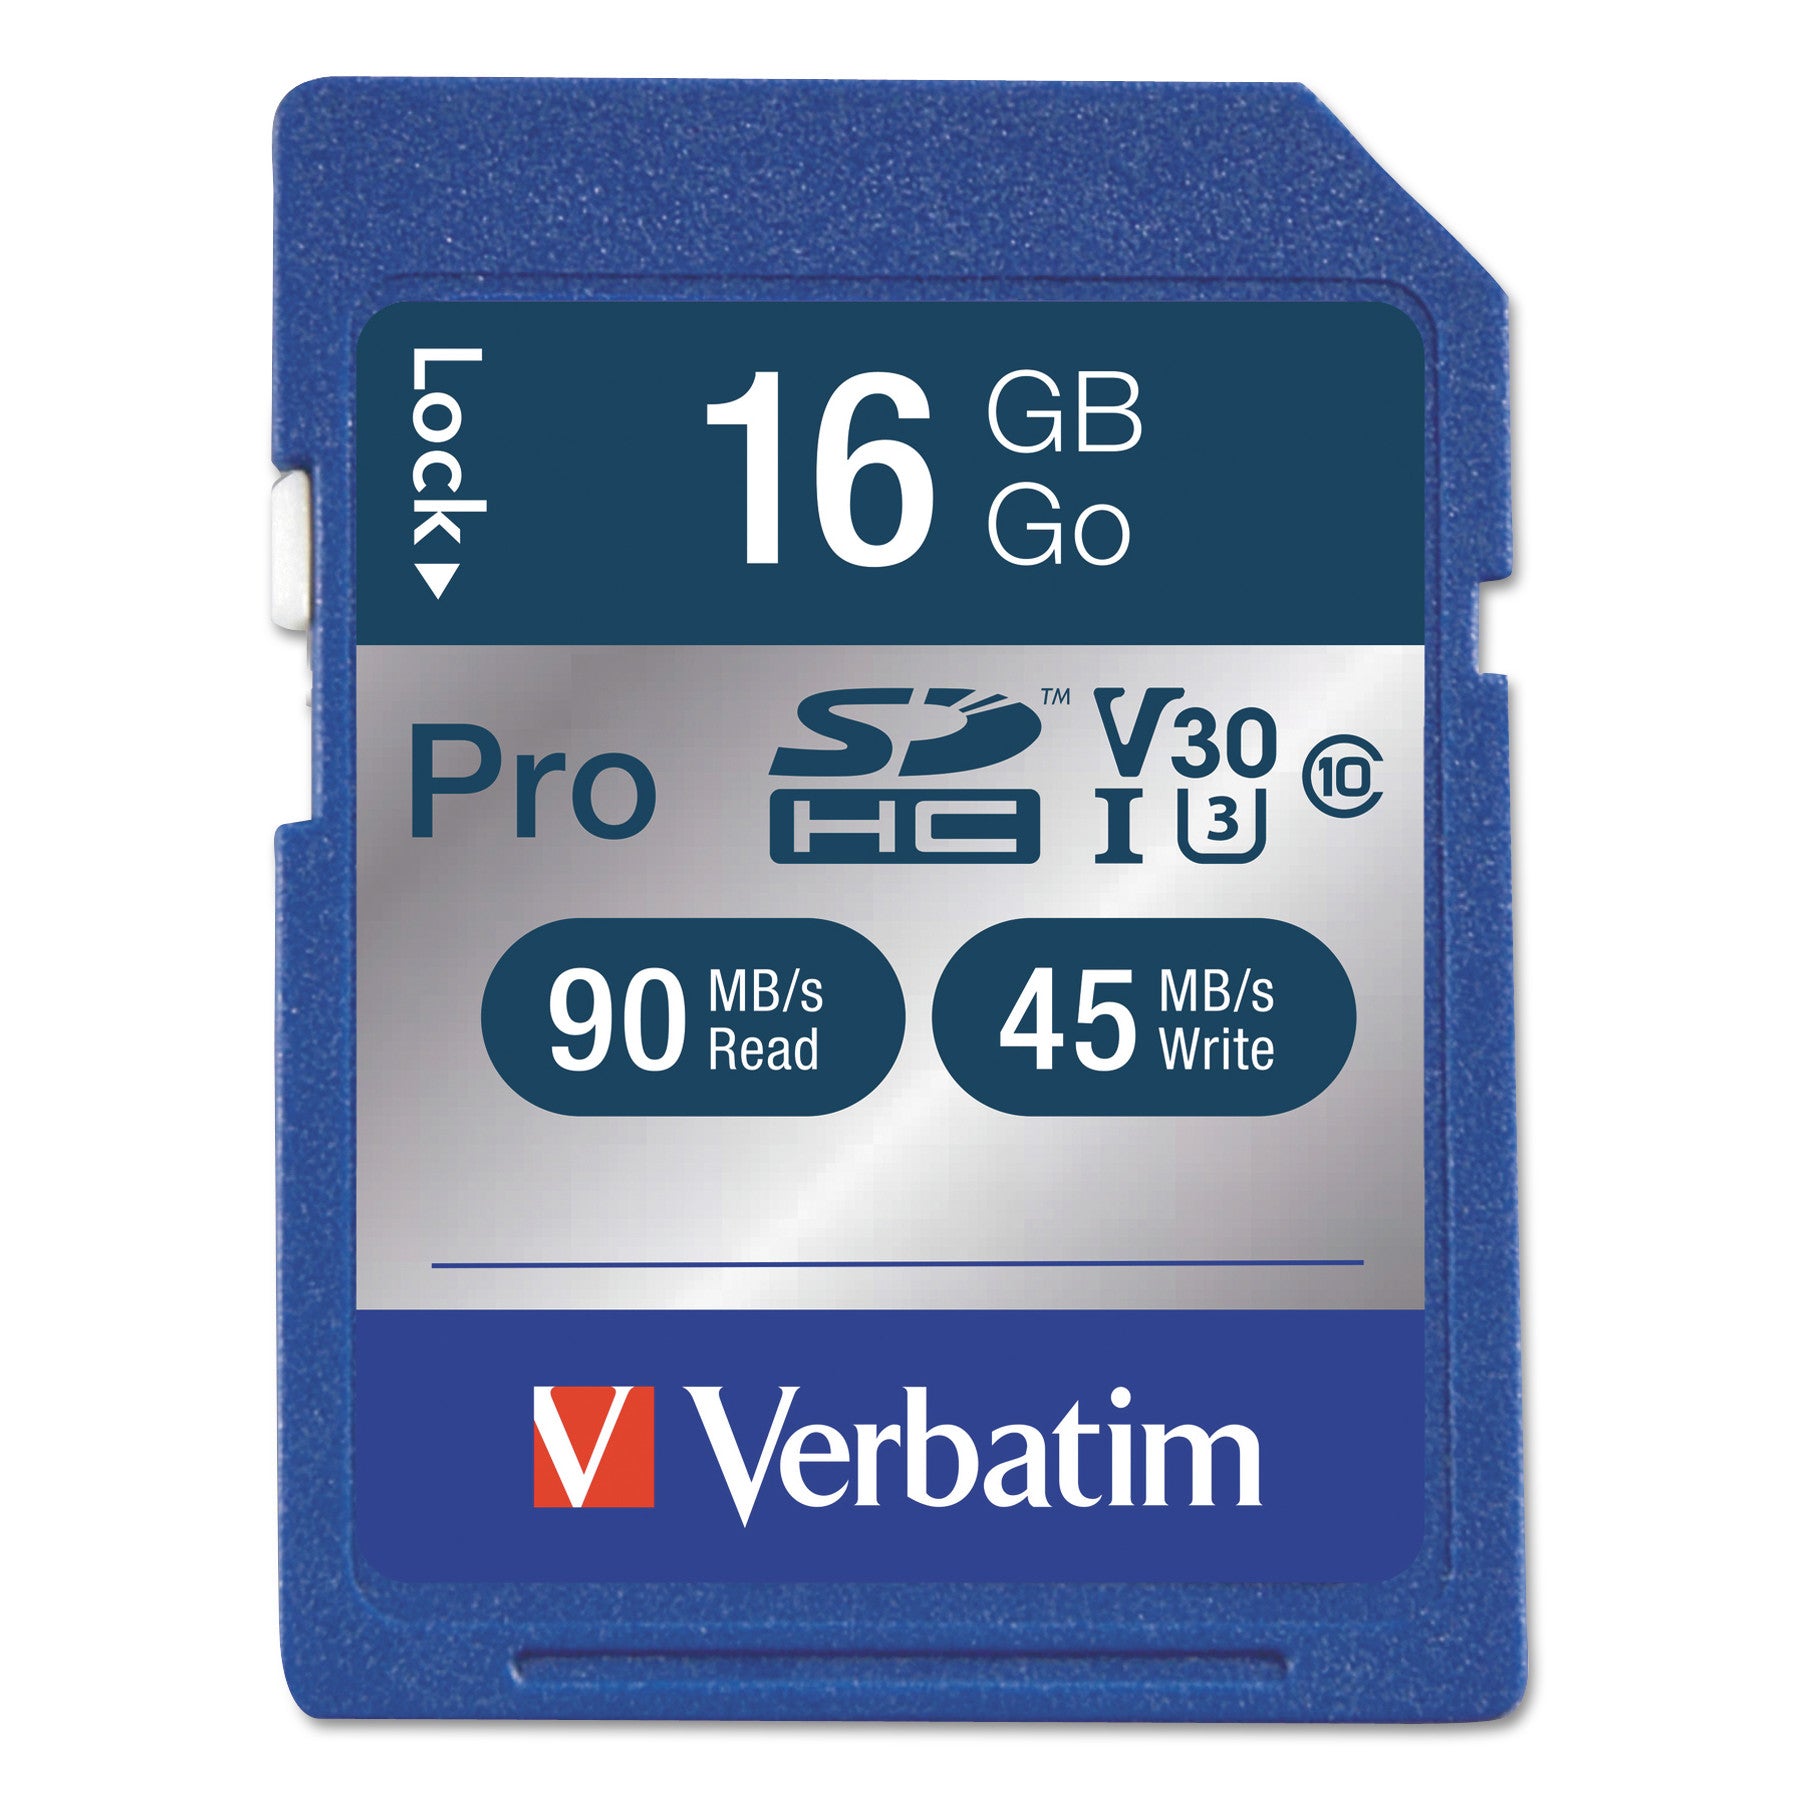 16GB Pro 600X SDHC Memory Card, UHS-I V30 U3 Class 10 - 